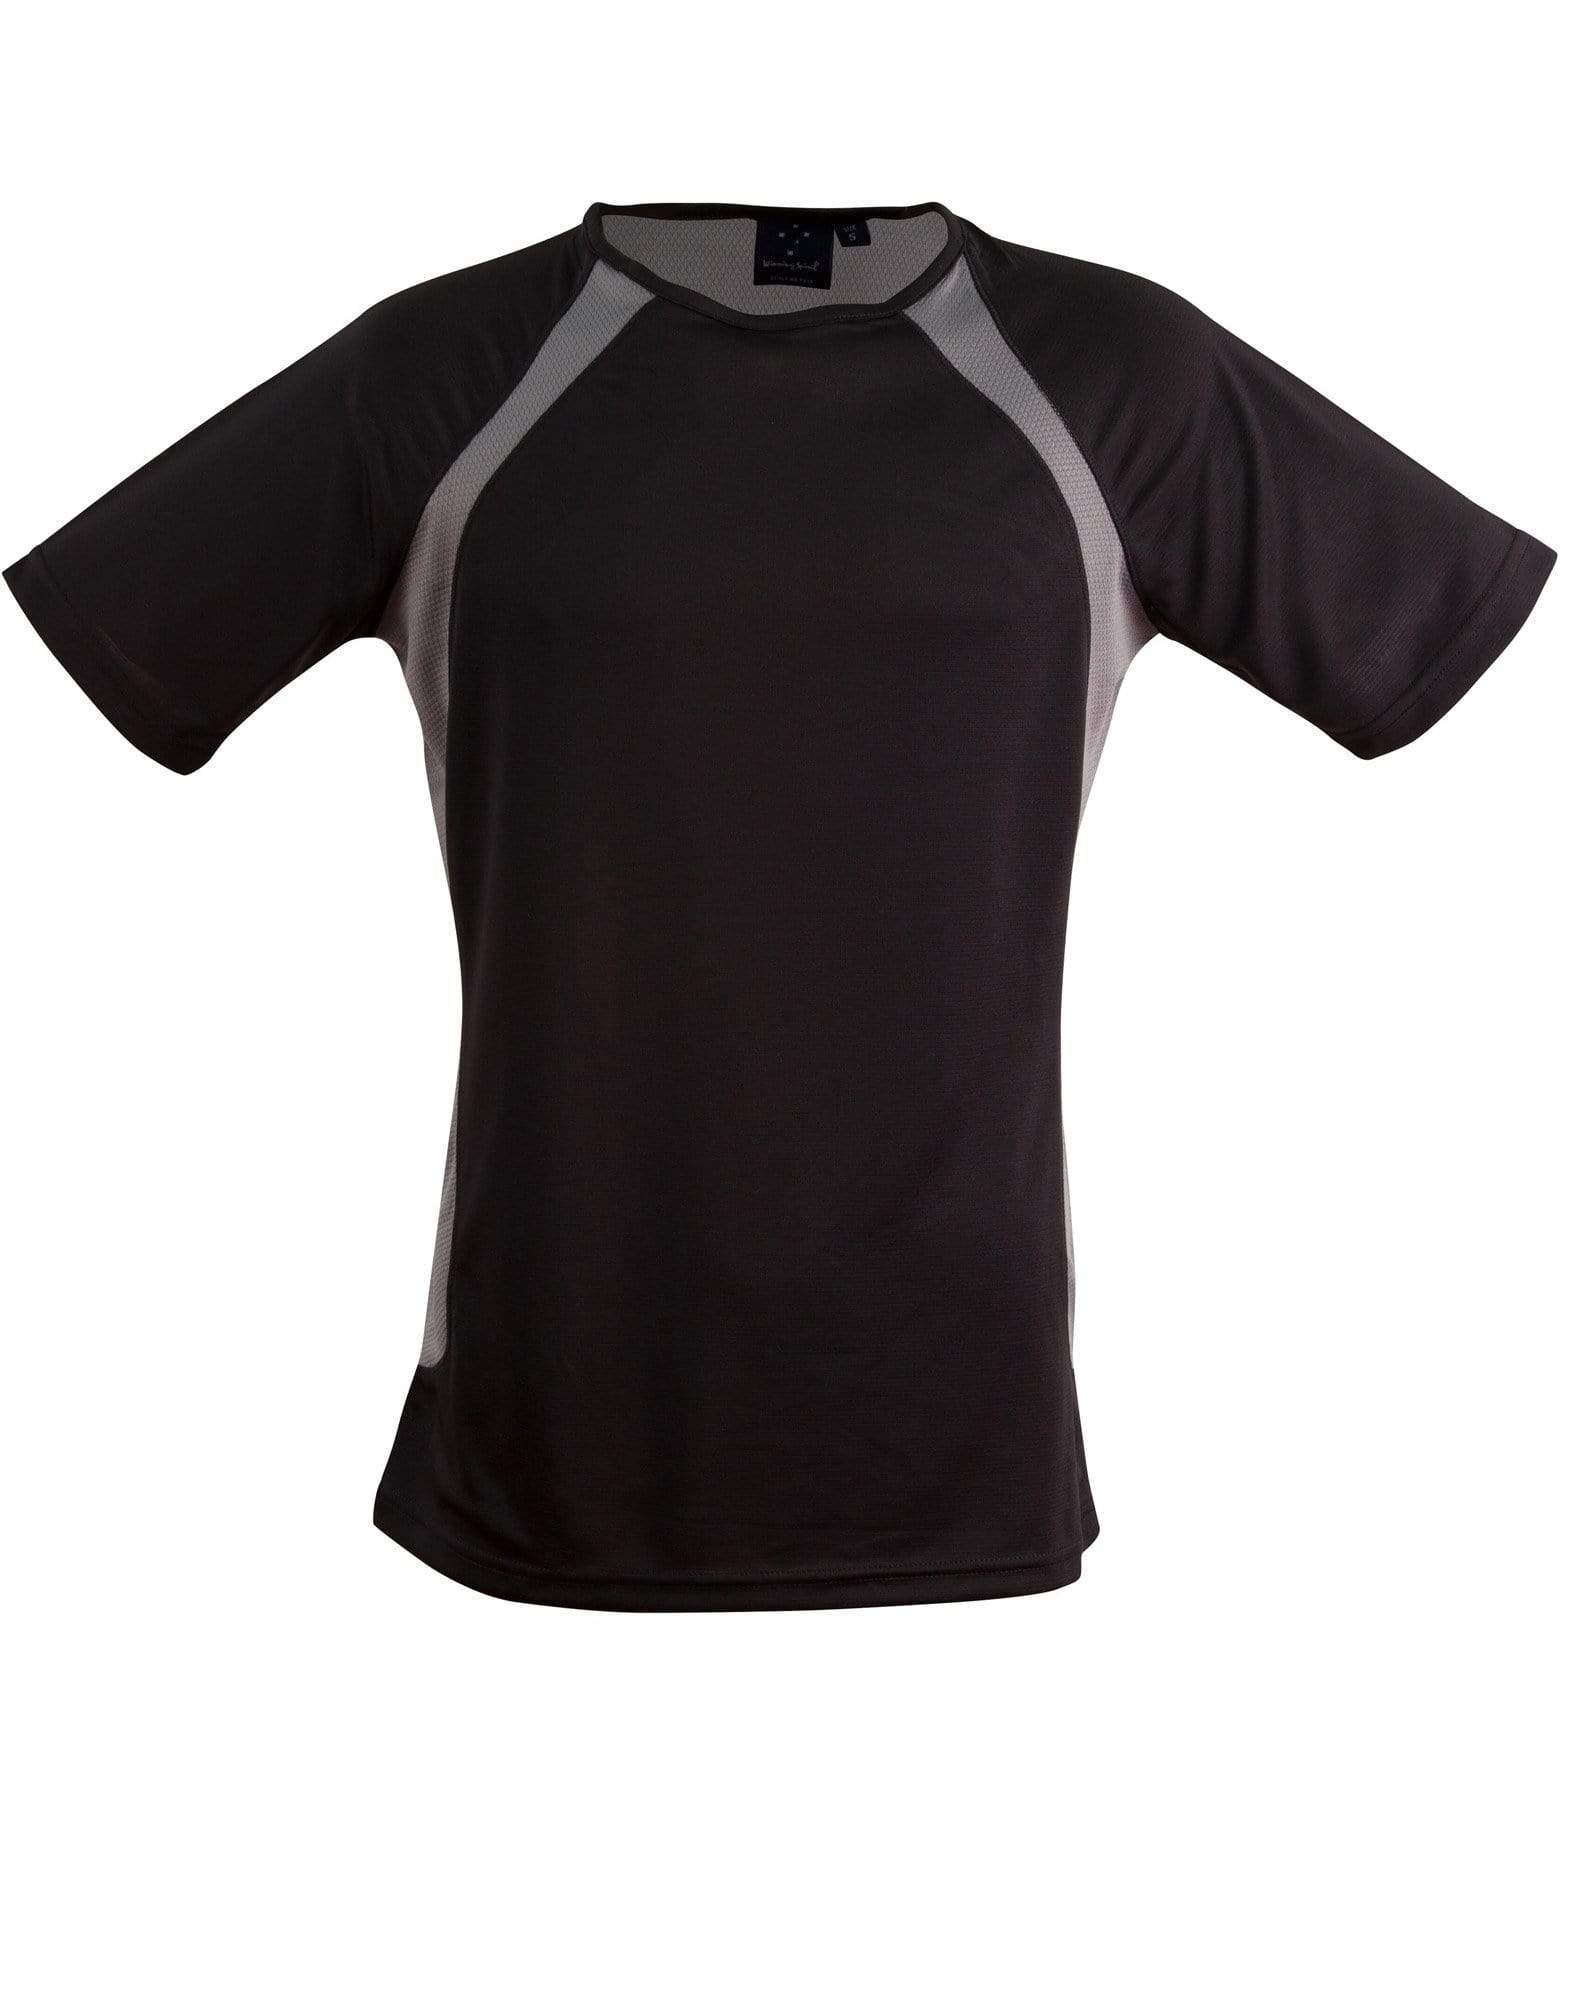 Sprint Tee Shirt Men's Ts71 Casual Wear Winning Spirit Black/Ash S 